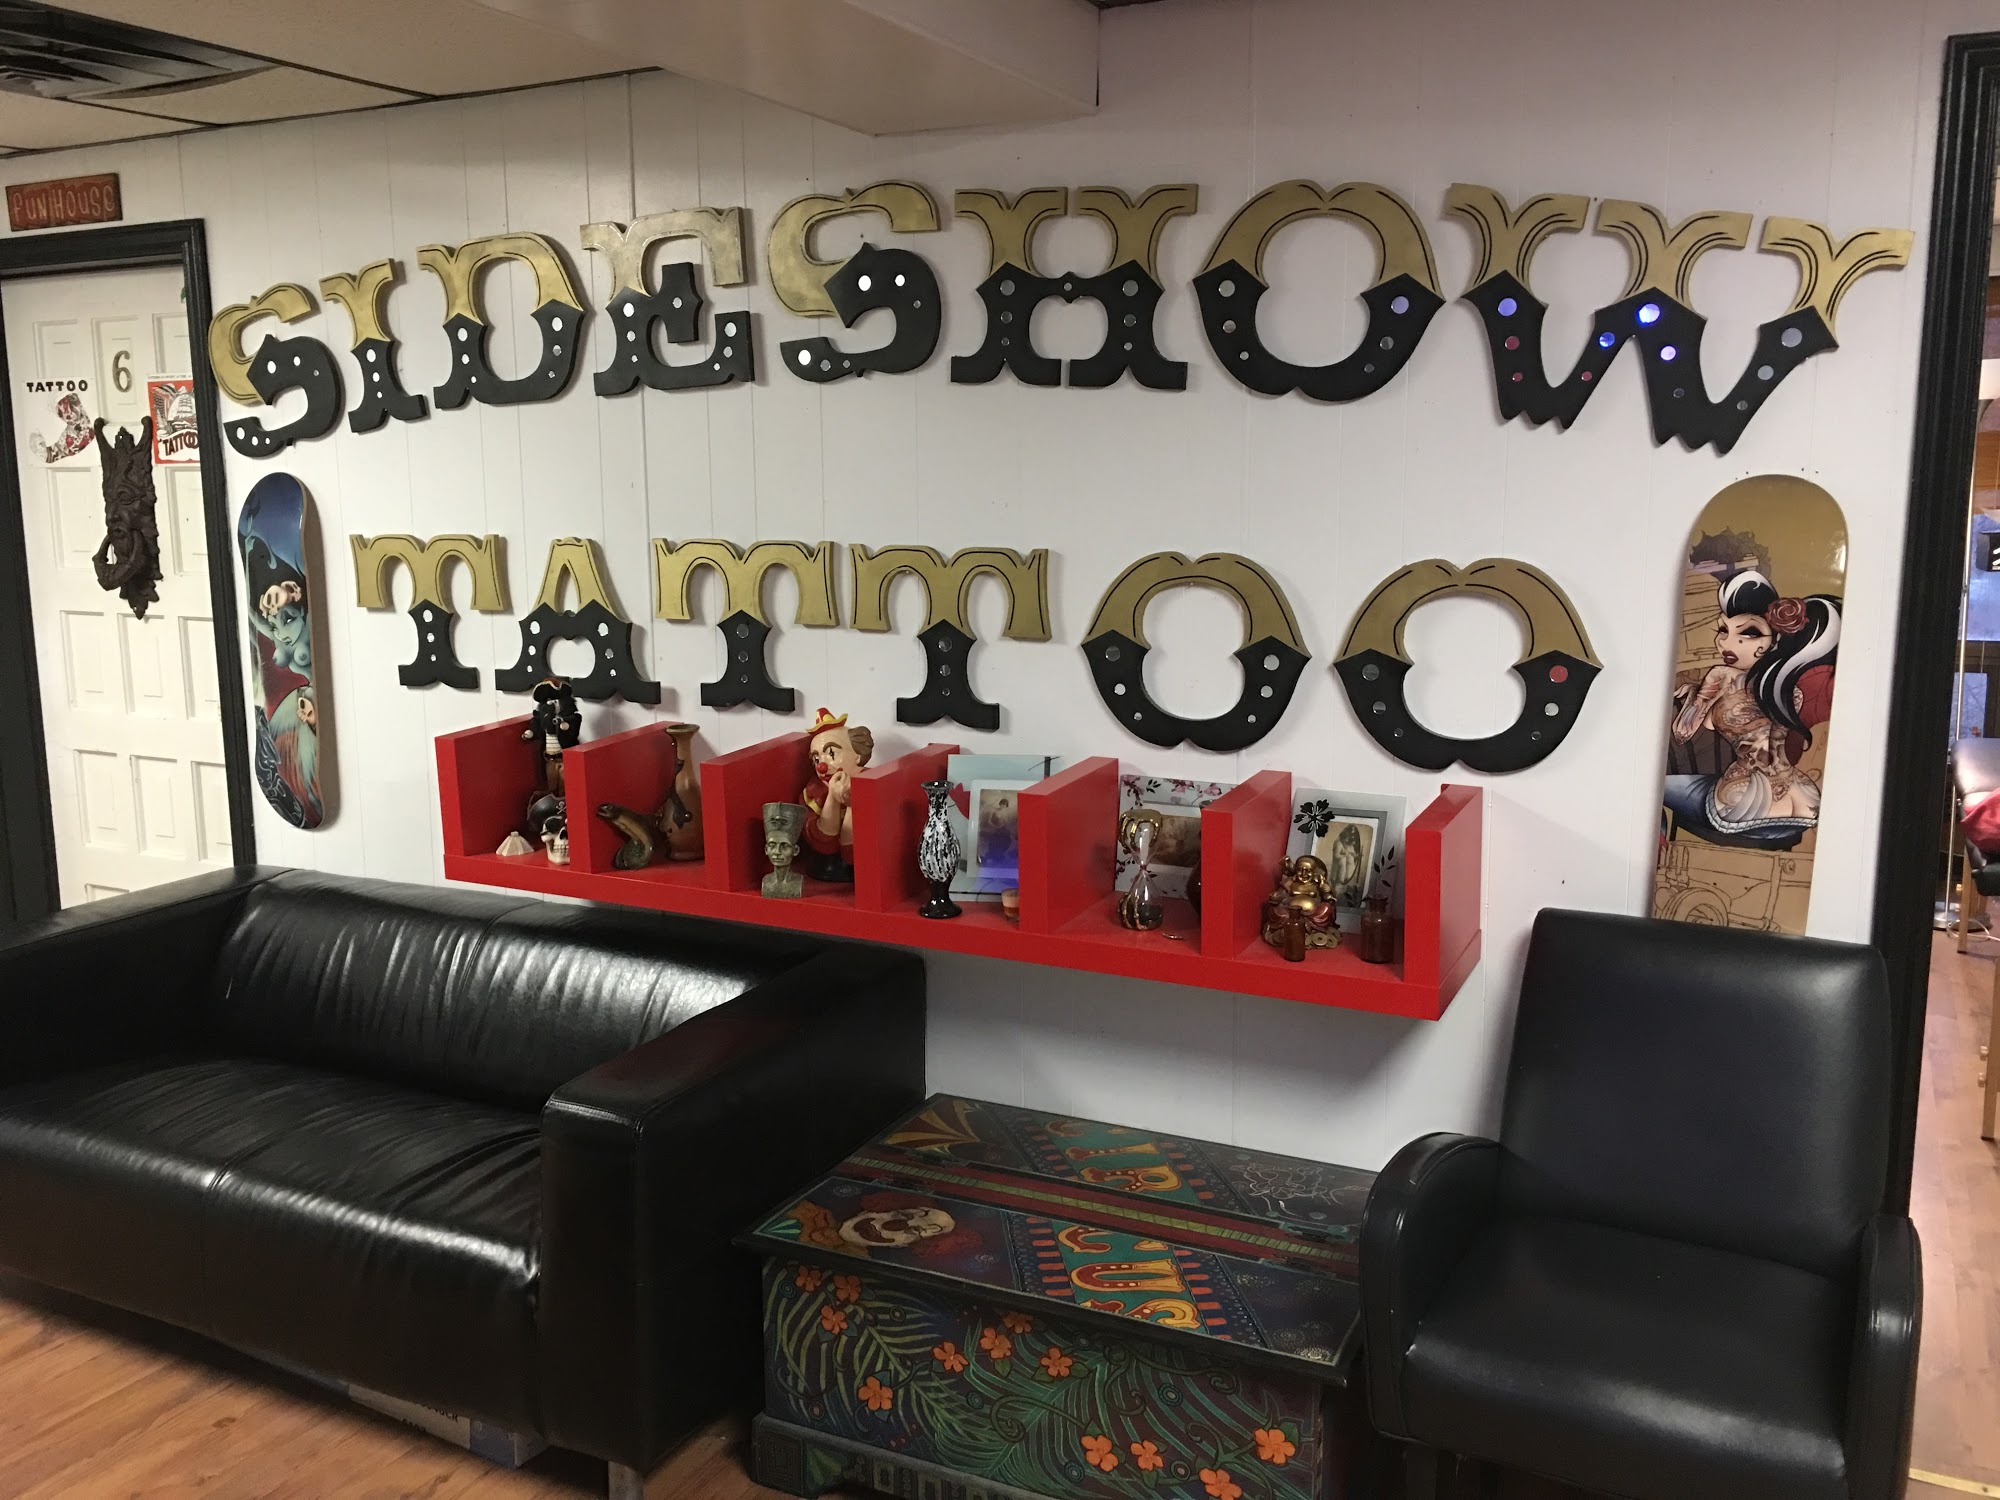 Sideshow Tattoo & Piercings